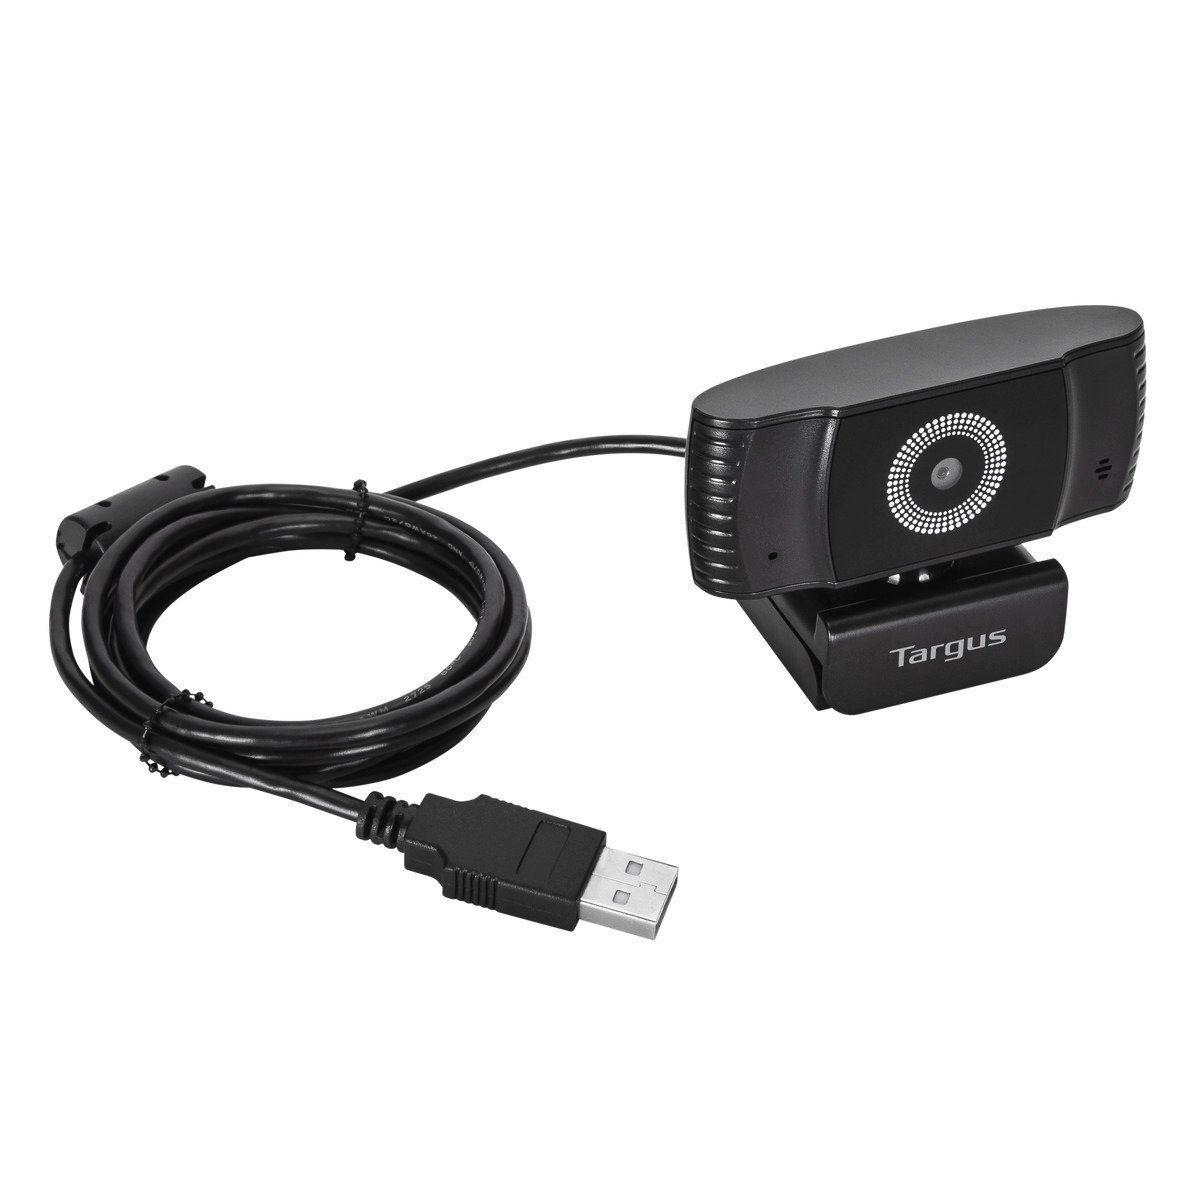 Targus Autofokus mit Webcam Webcam Plus Webcam HD Full